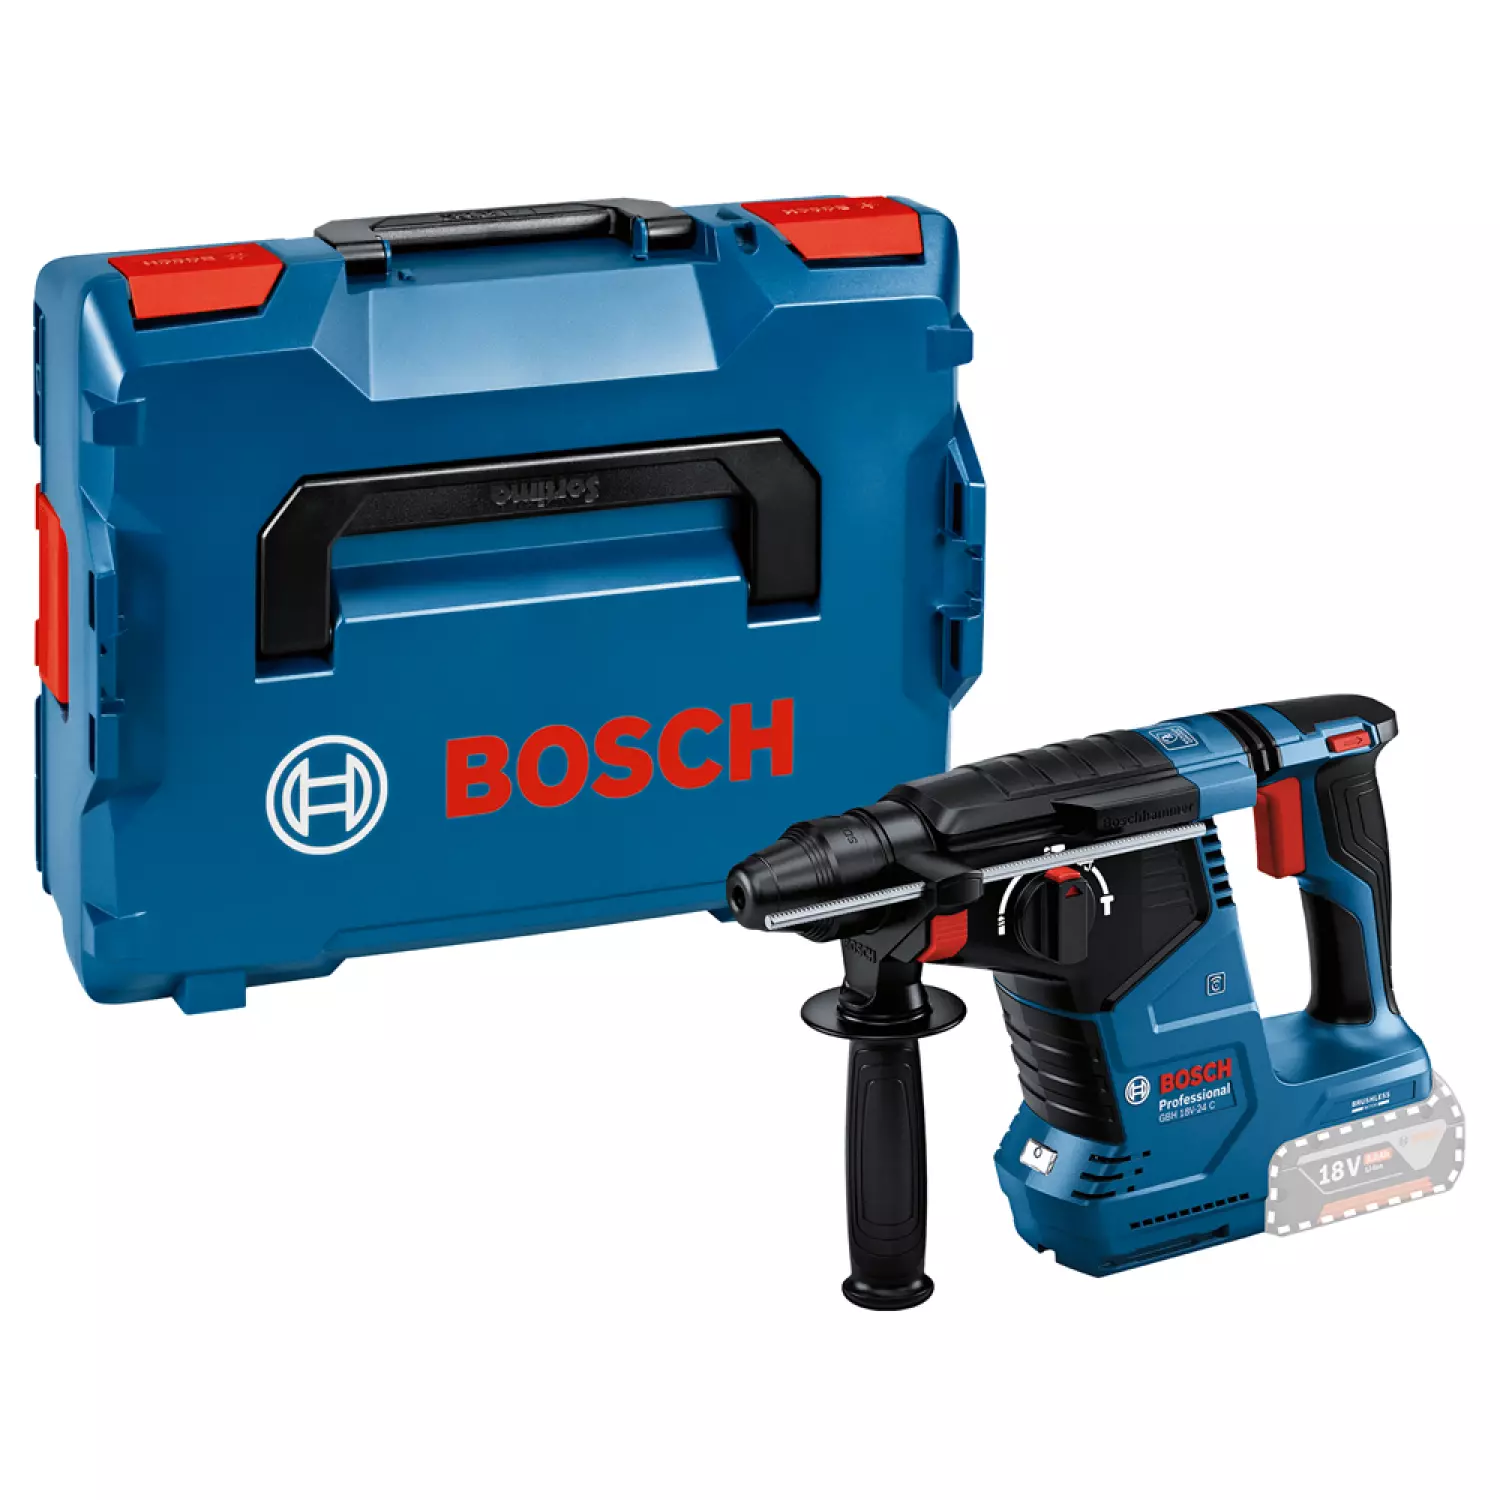 Bosch GBH 18V-24 C 18V Li-ion Accu SDS-Plus boorhamer body in L-Boxx - 2,4J - 30mm-image